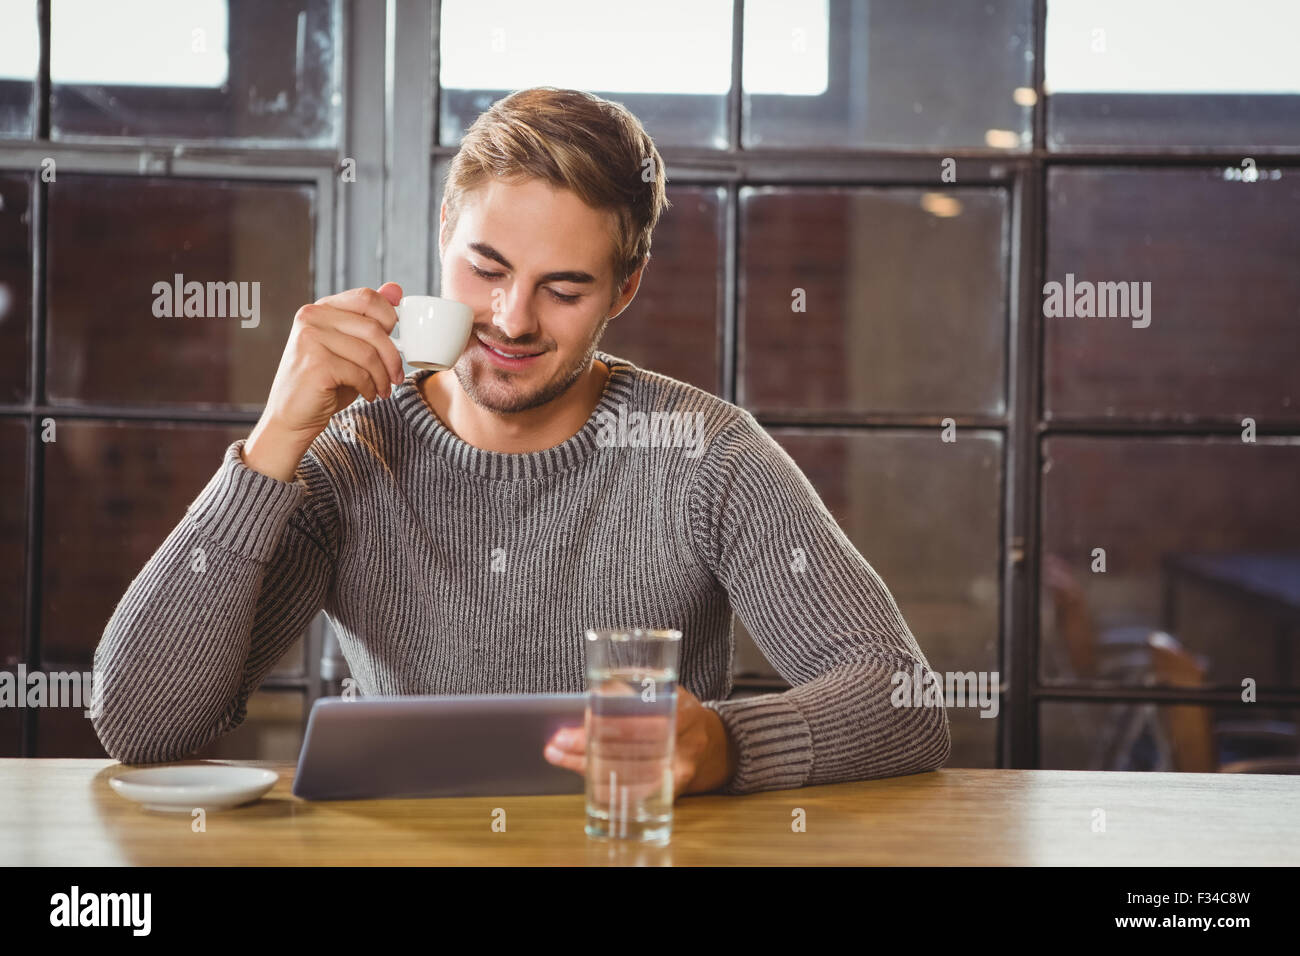 Attractive Man Drinking Coffee in a Bar Coffee Mug by Stefano C